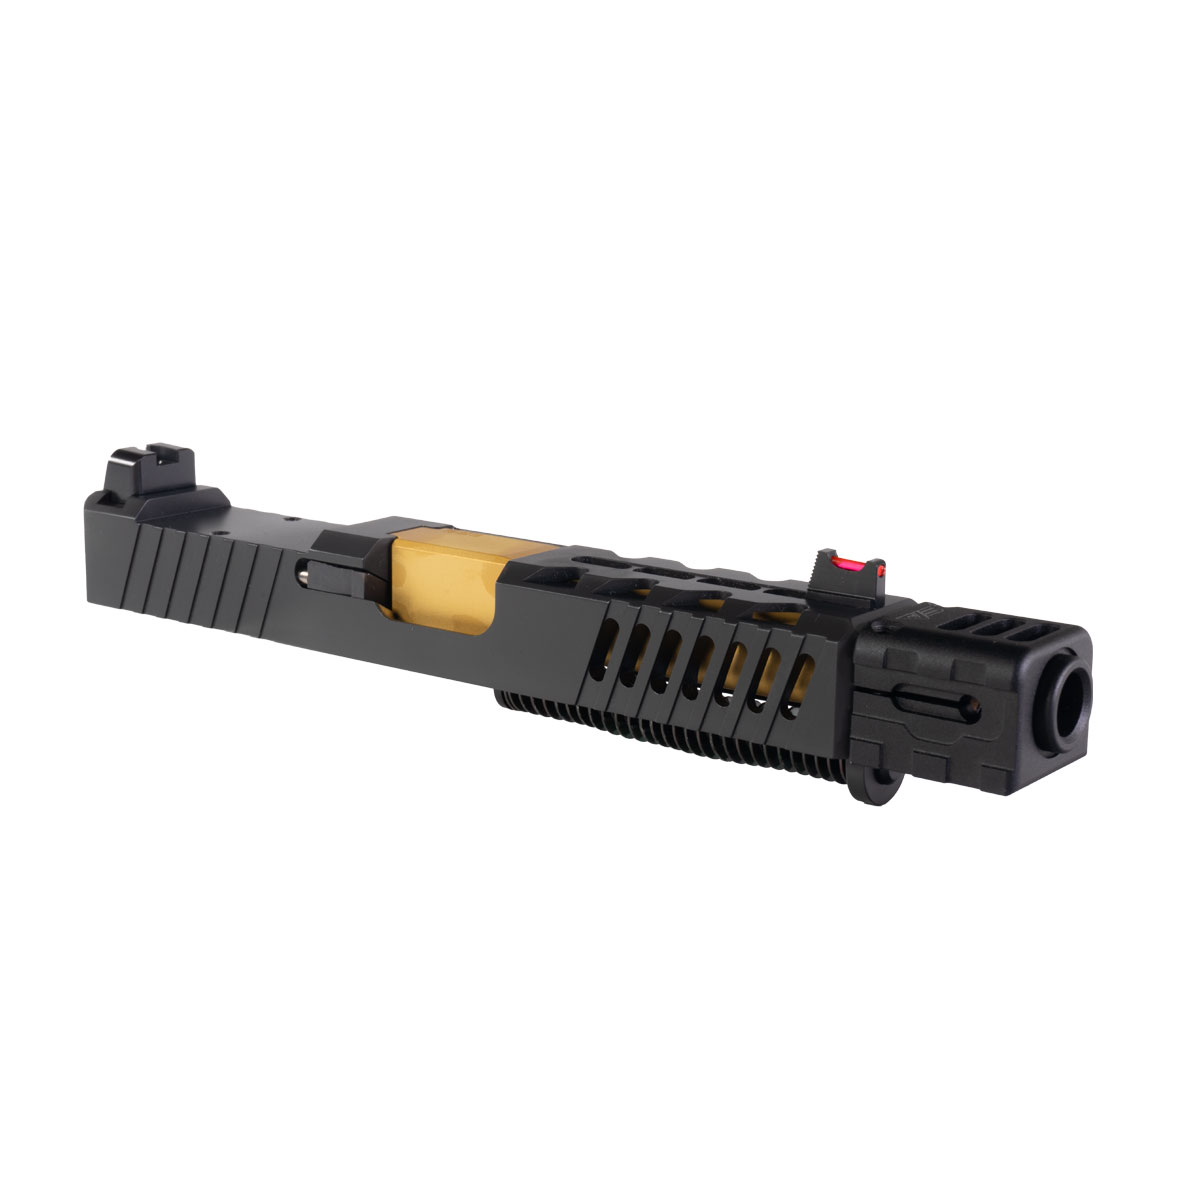 DTT 'Beom w/ Sylvan Arms Compensator' 9mm Complete Slide Kit - Glock 19 Gen 1-3 Compatible